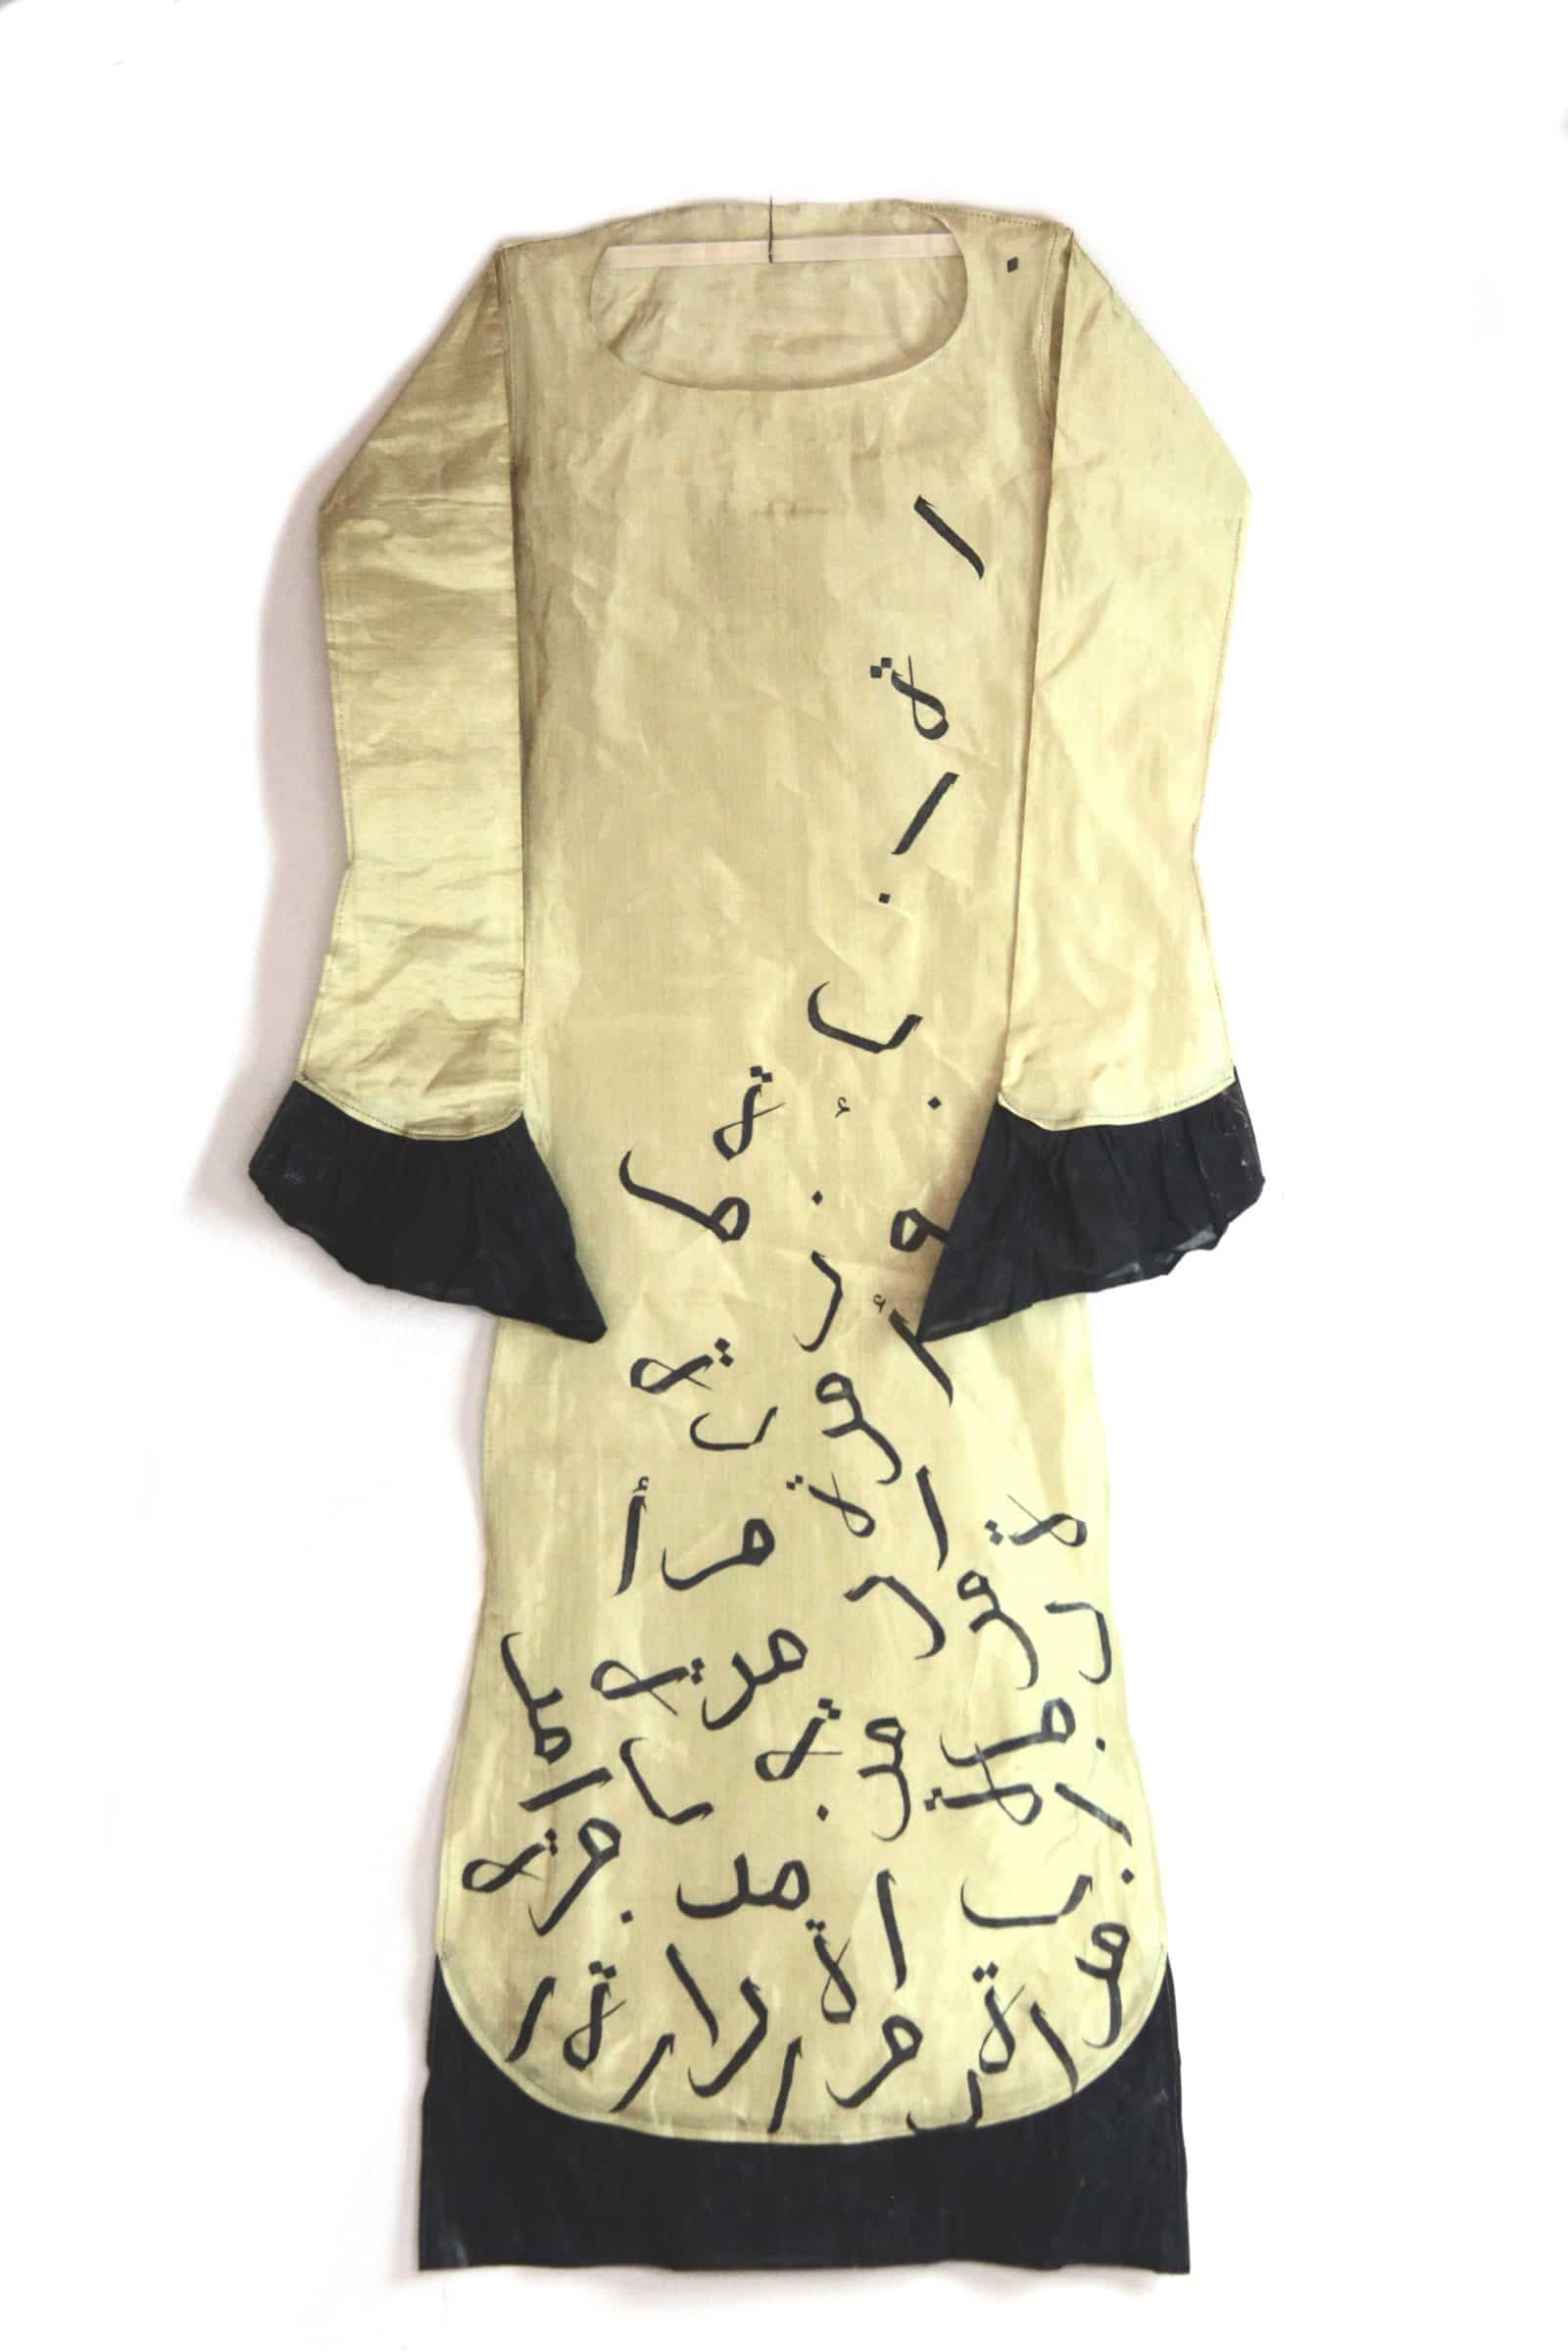 Belgin Yucelen - Calligraphy Dress 